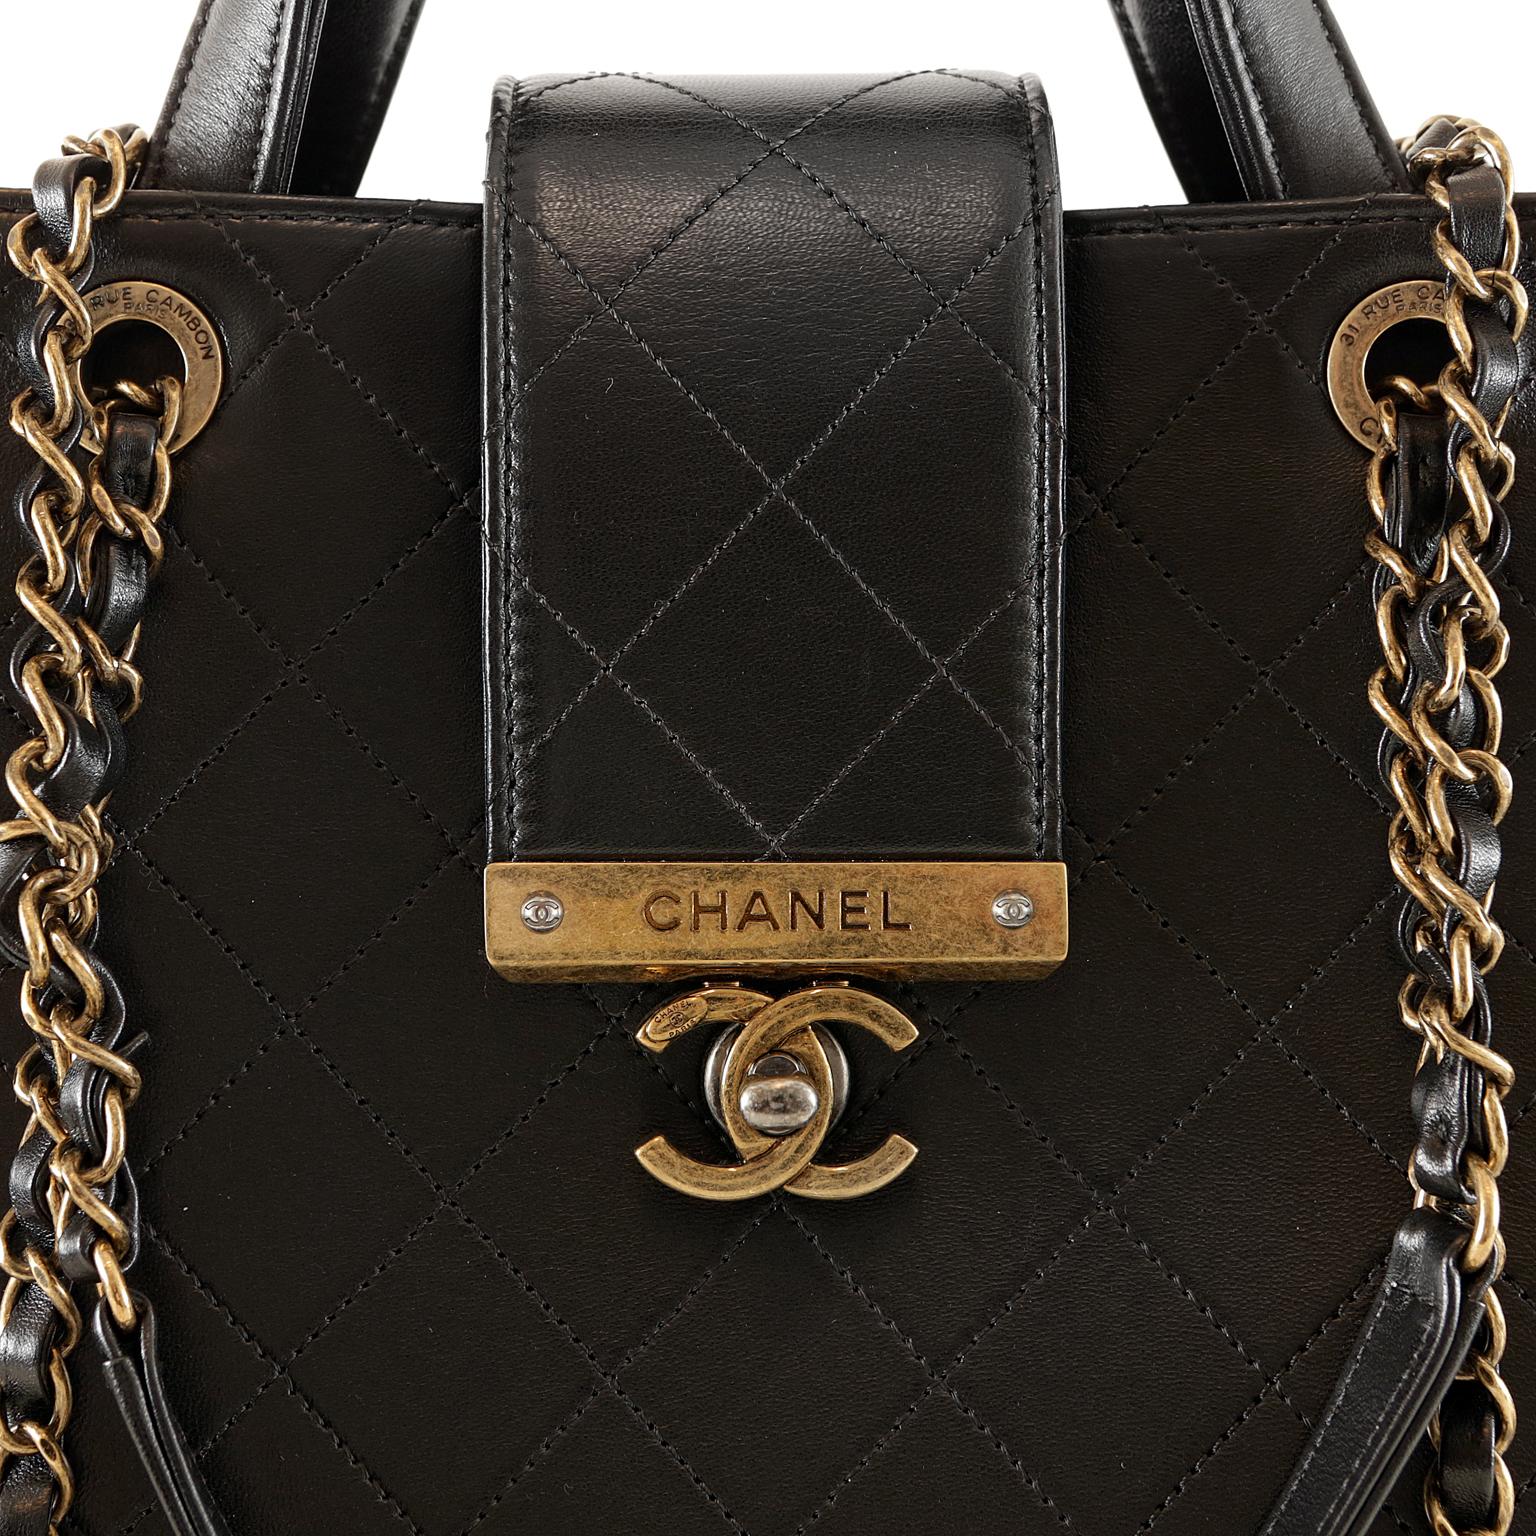 Chanel Black Leather Executive Shopper 3